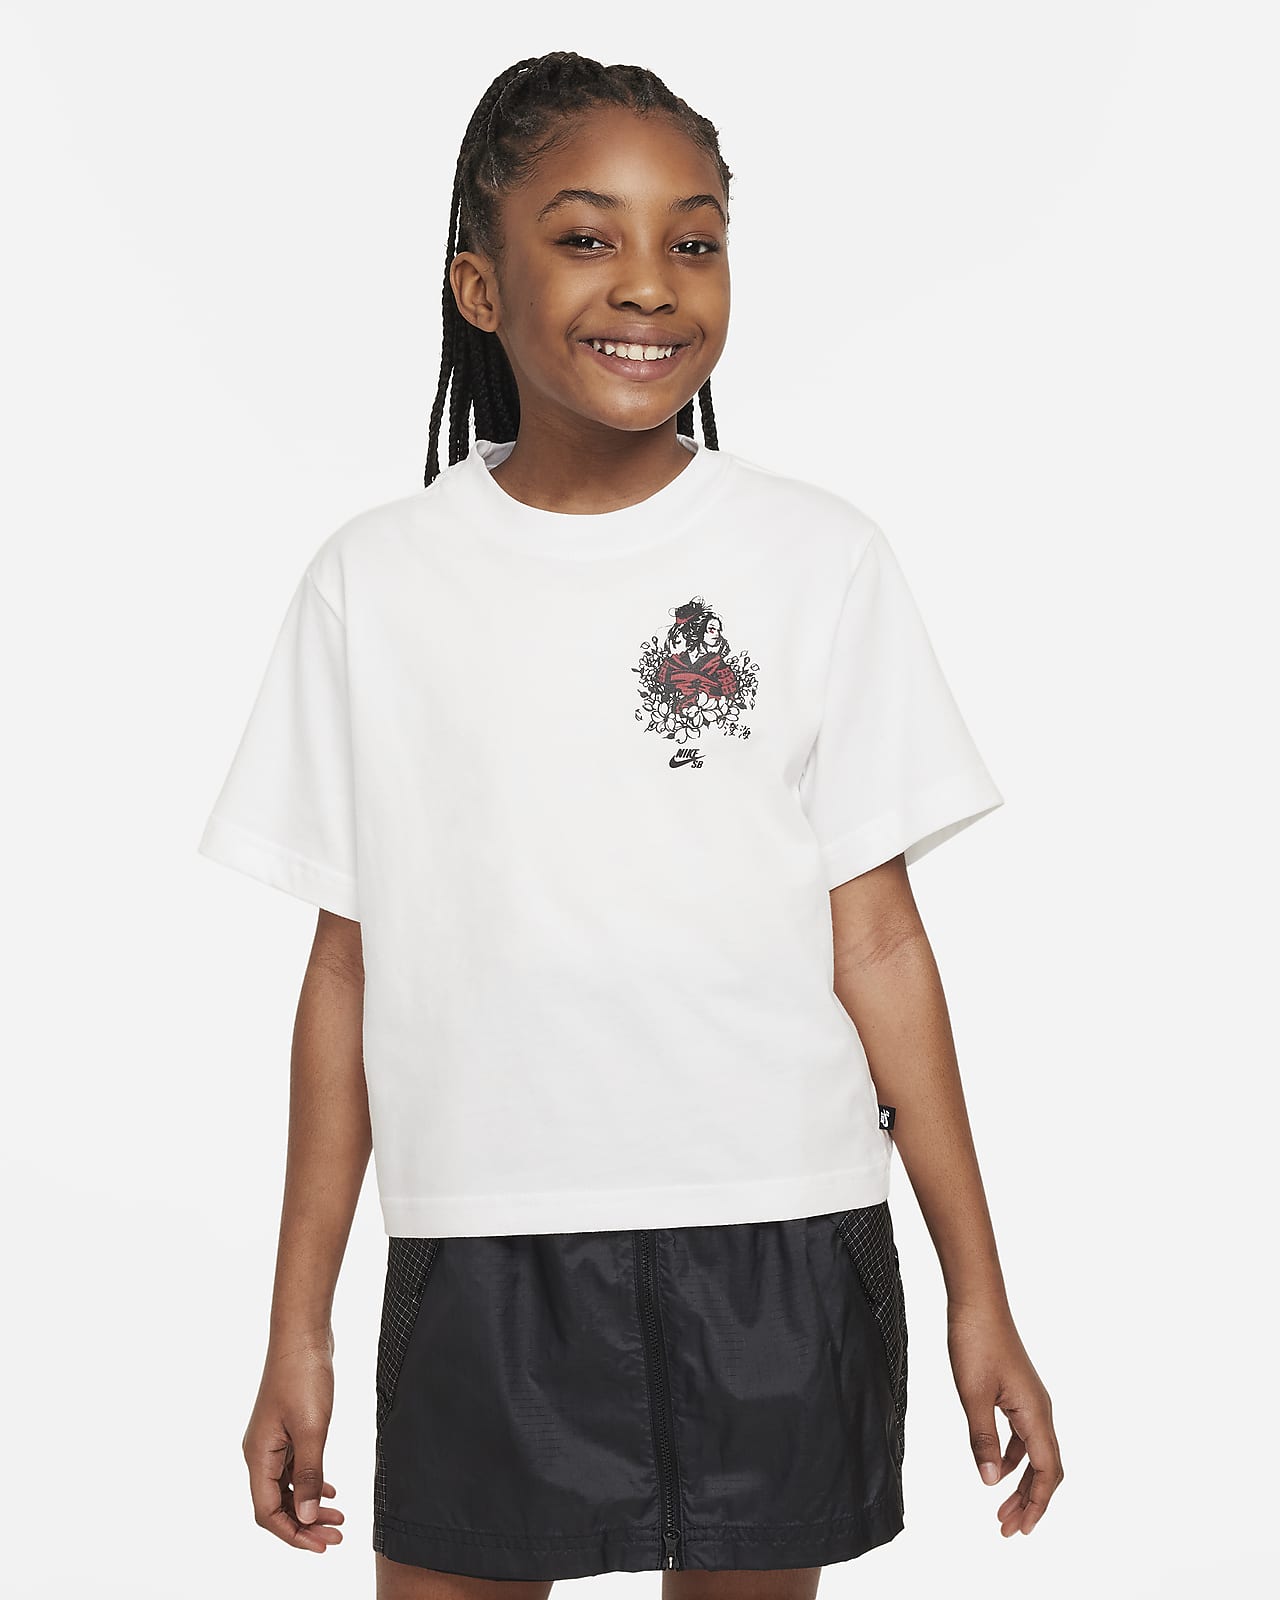 Sky Brown x Nike SB Older Kids' (Girls') Skate T-Shirt